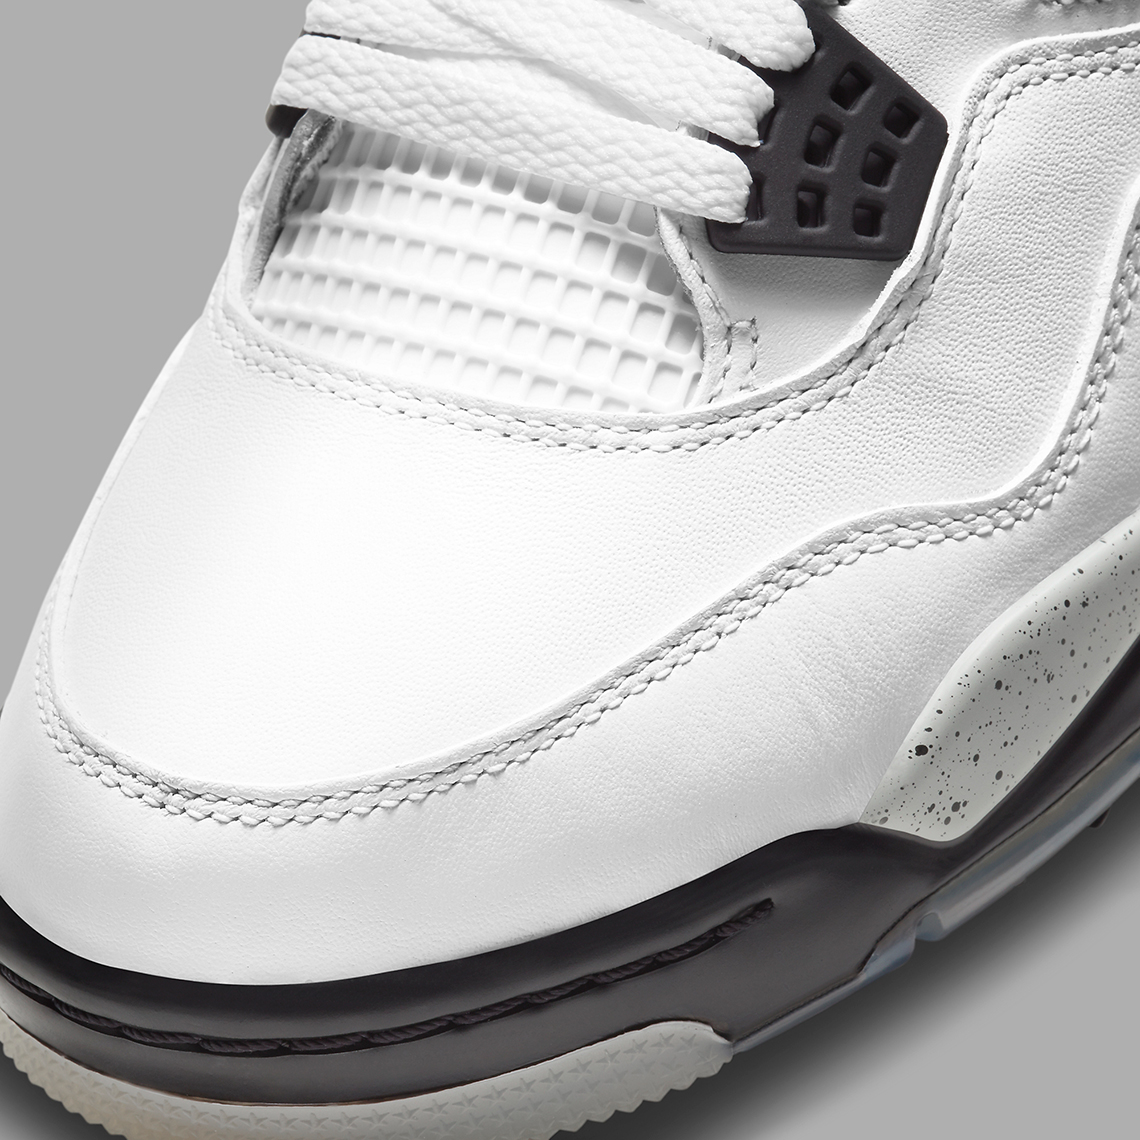 Air Jordan 4 Golf Shoes White Cement CU9981-100 | SneakerNews.com